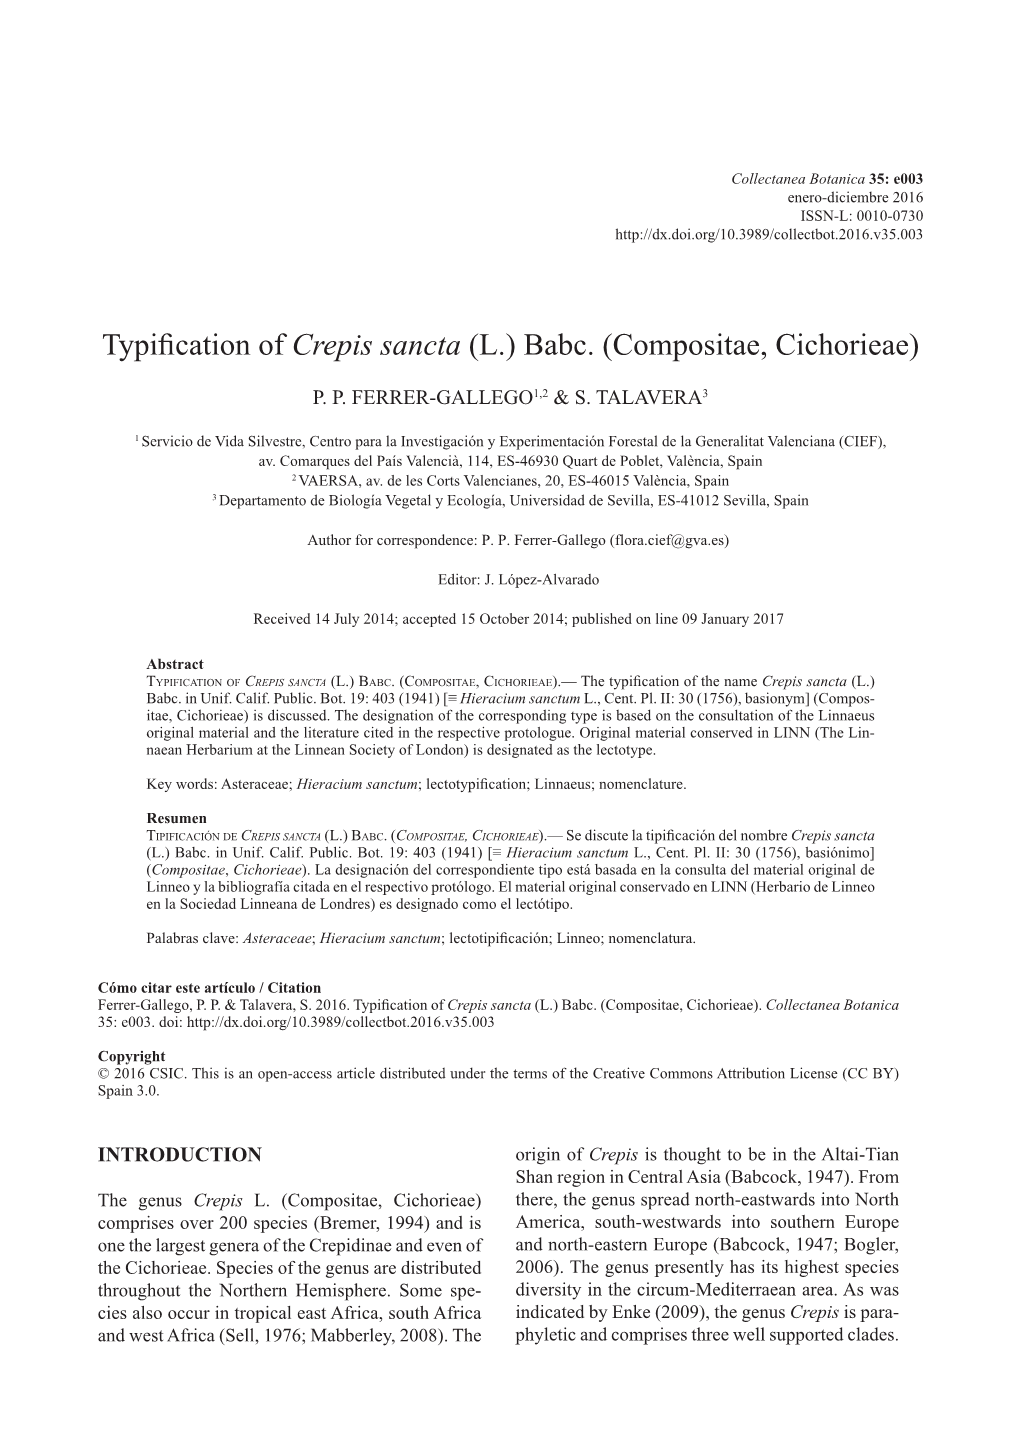 (Compositae, Cichorieae) ; Typification of Crepis Sancta